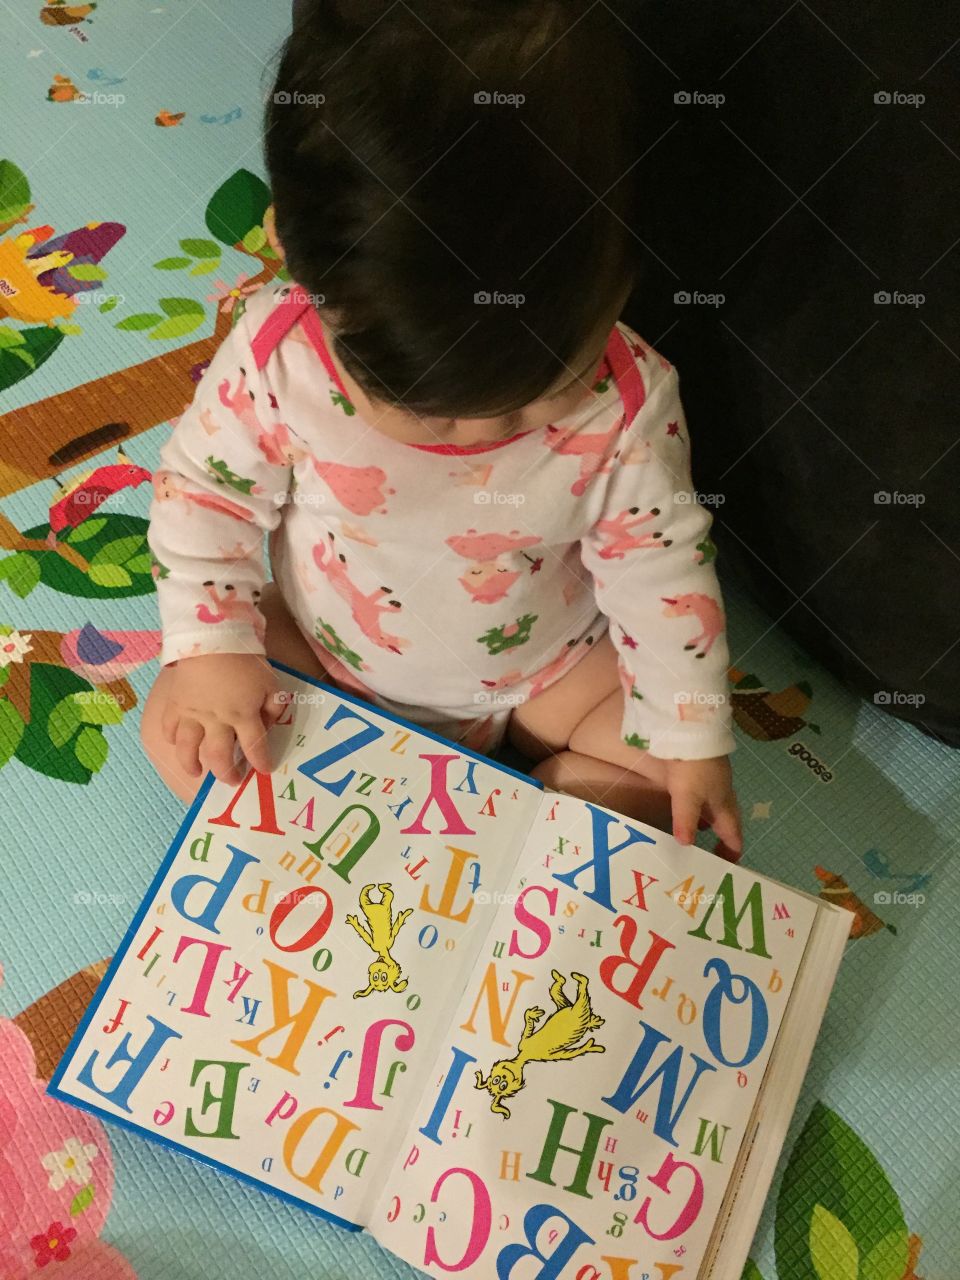 Learning her alphabet 